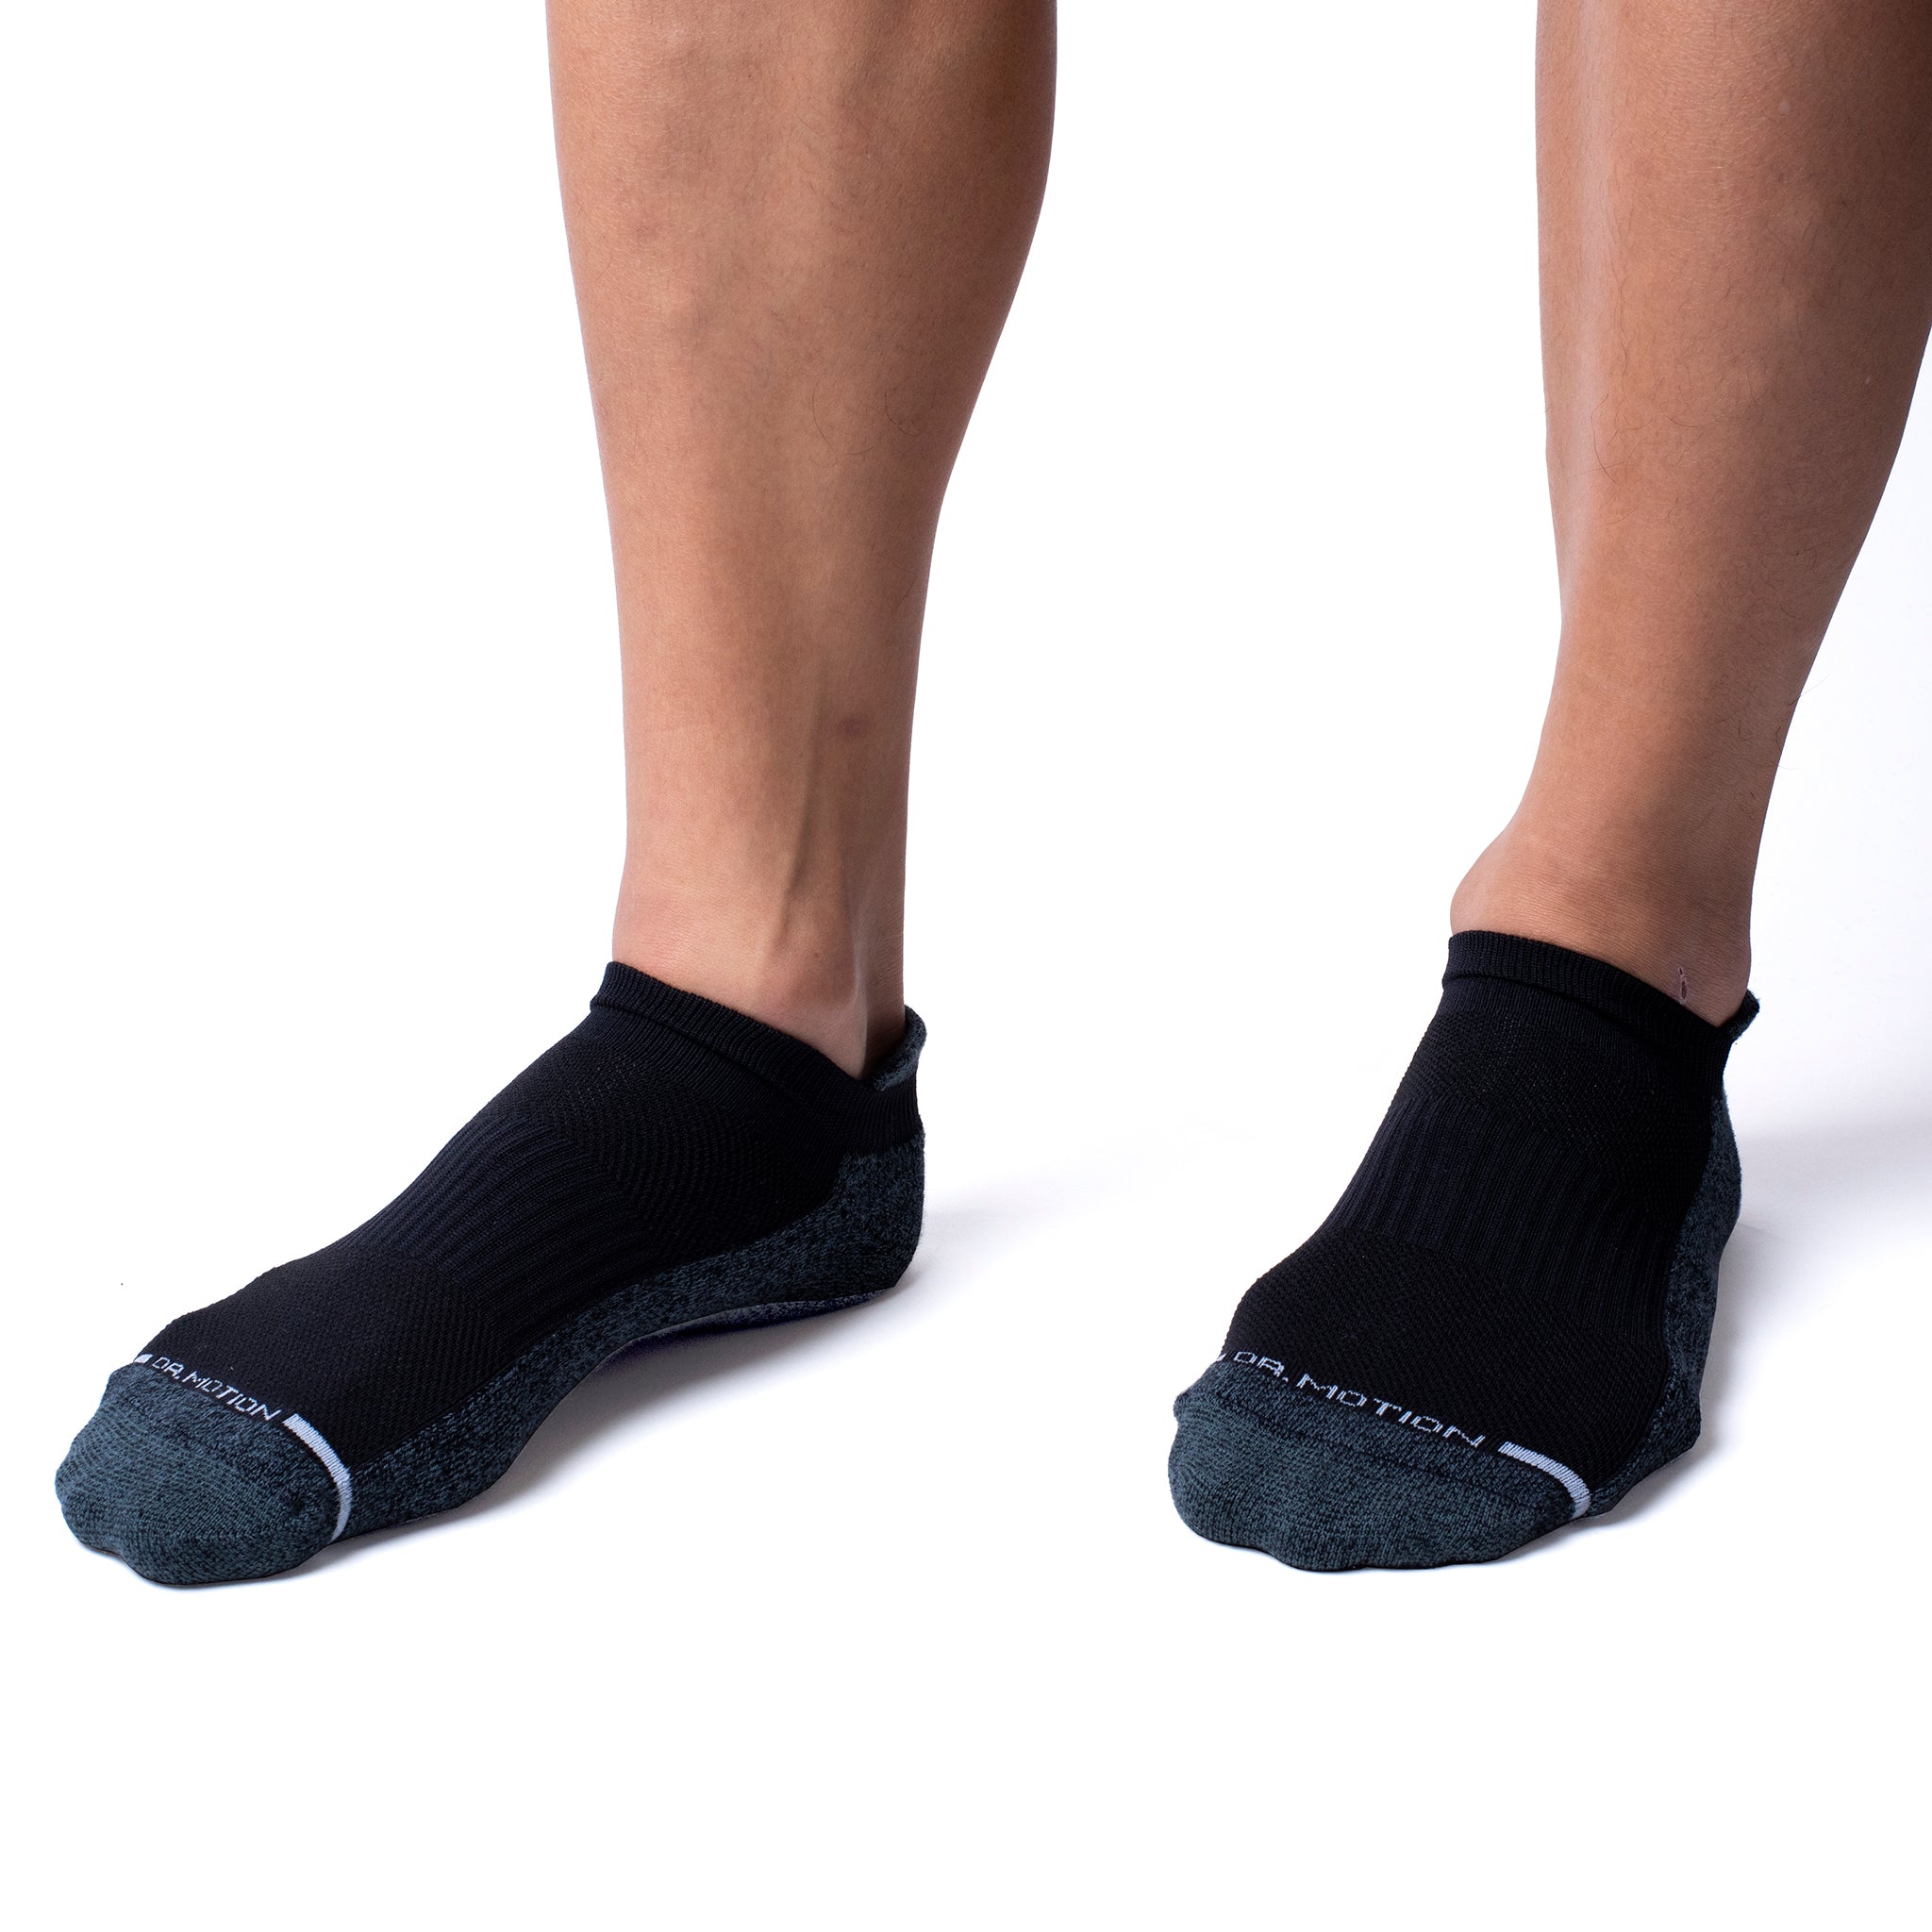 Dr. Motion Men's 2 Pack Basic Colors Everyday Compression Ankle Socks White